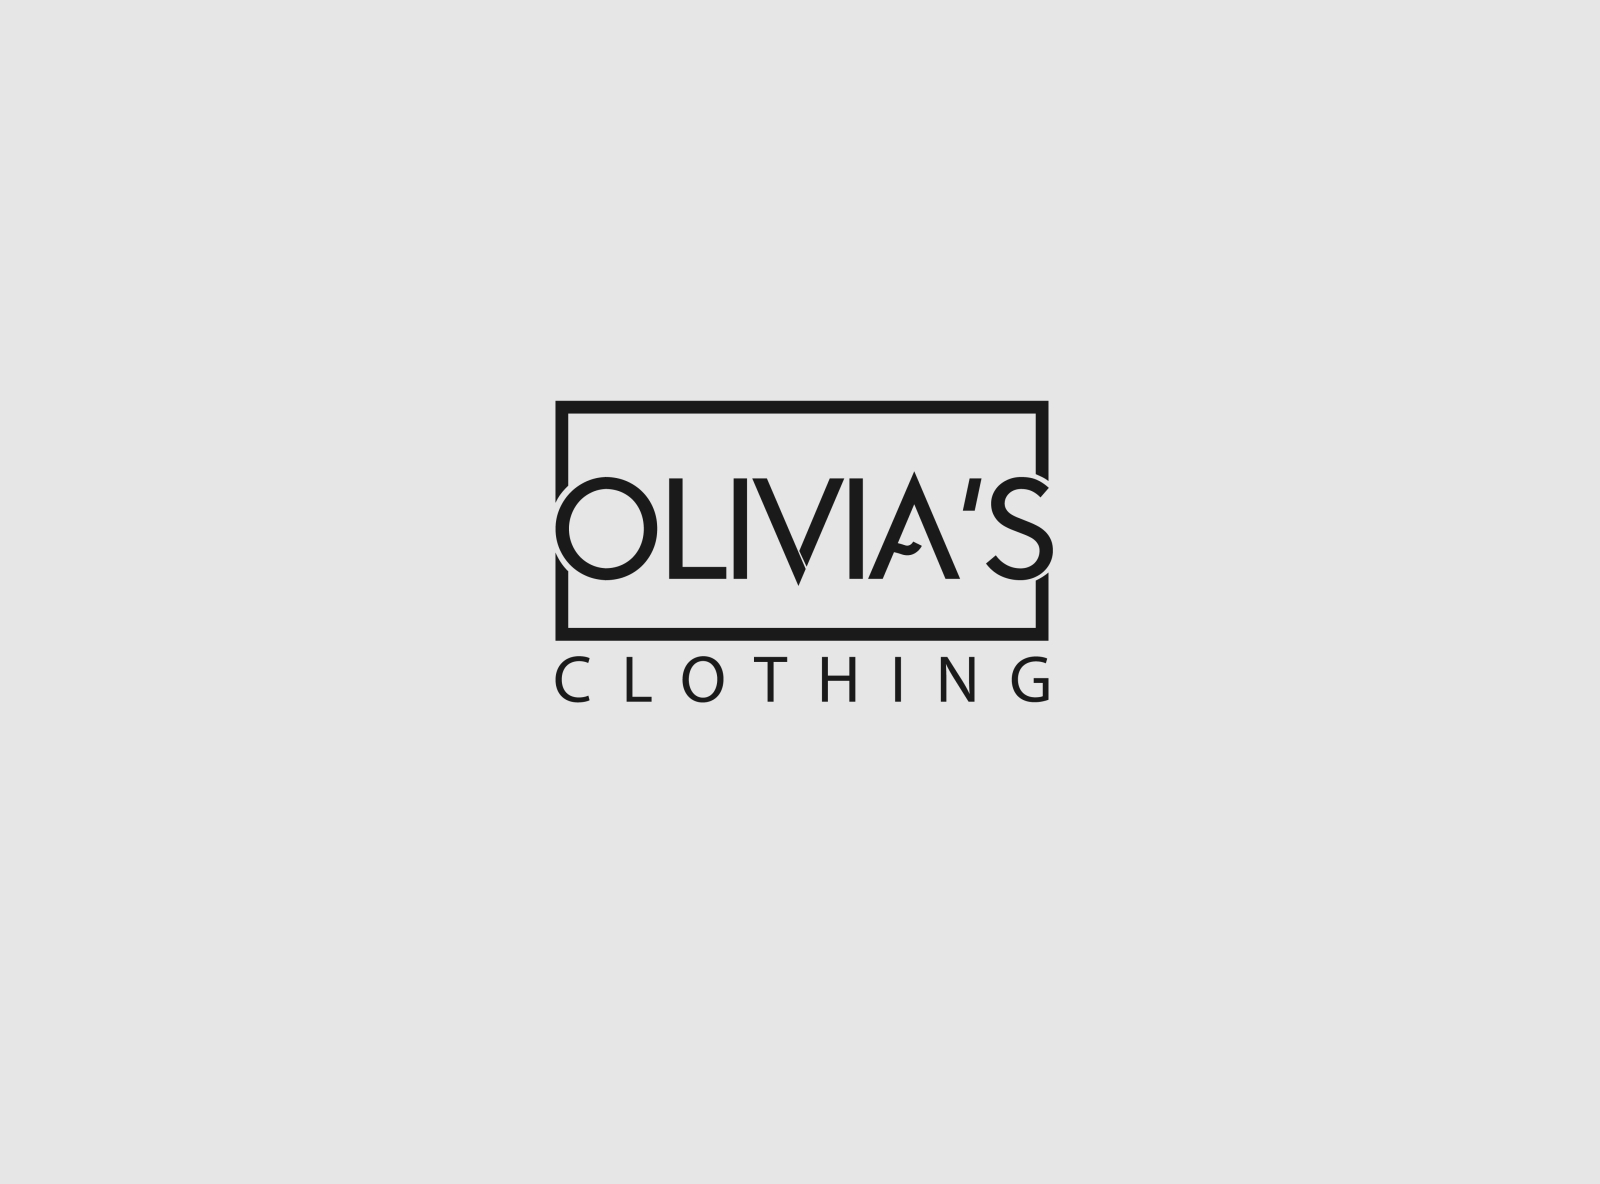 Olivia's Clothing Logo Design by Amazy Designs on Dribbble